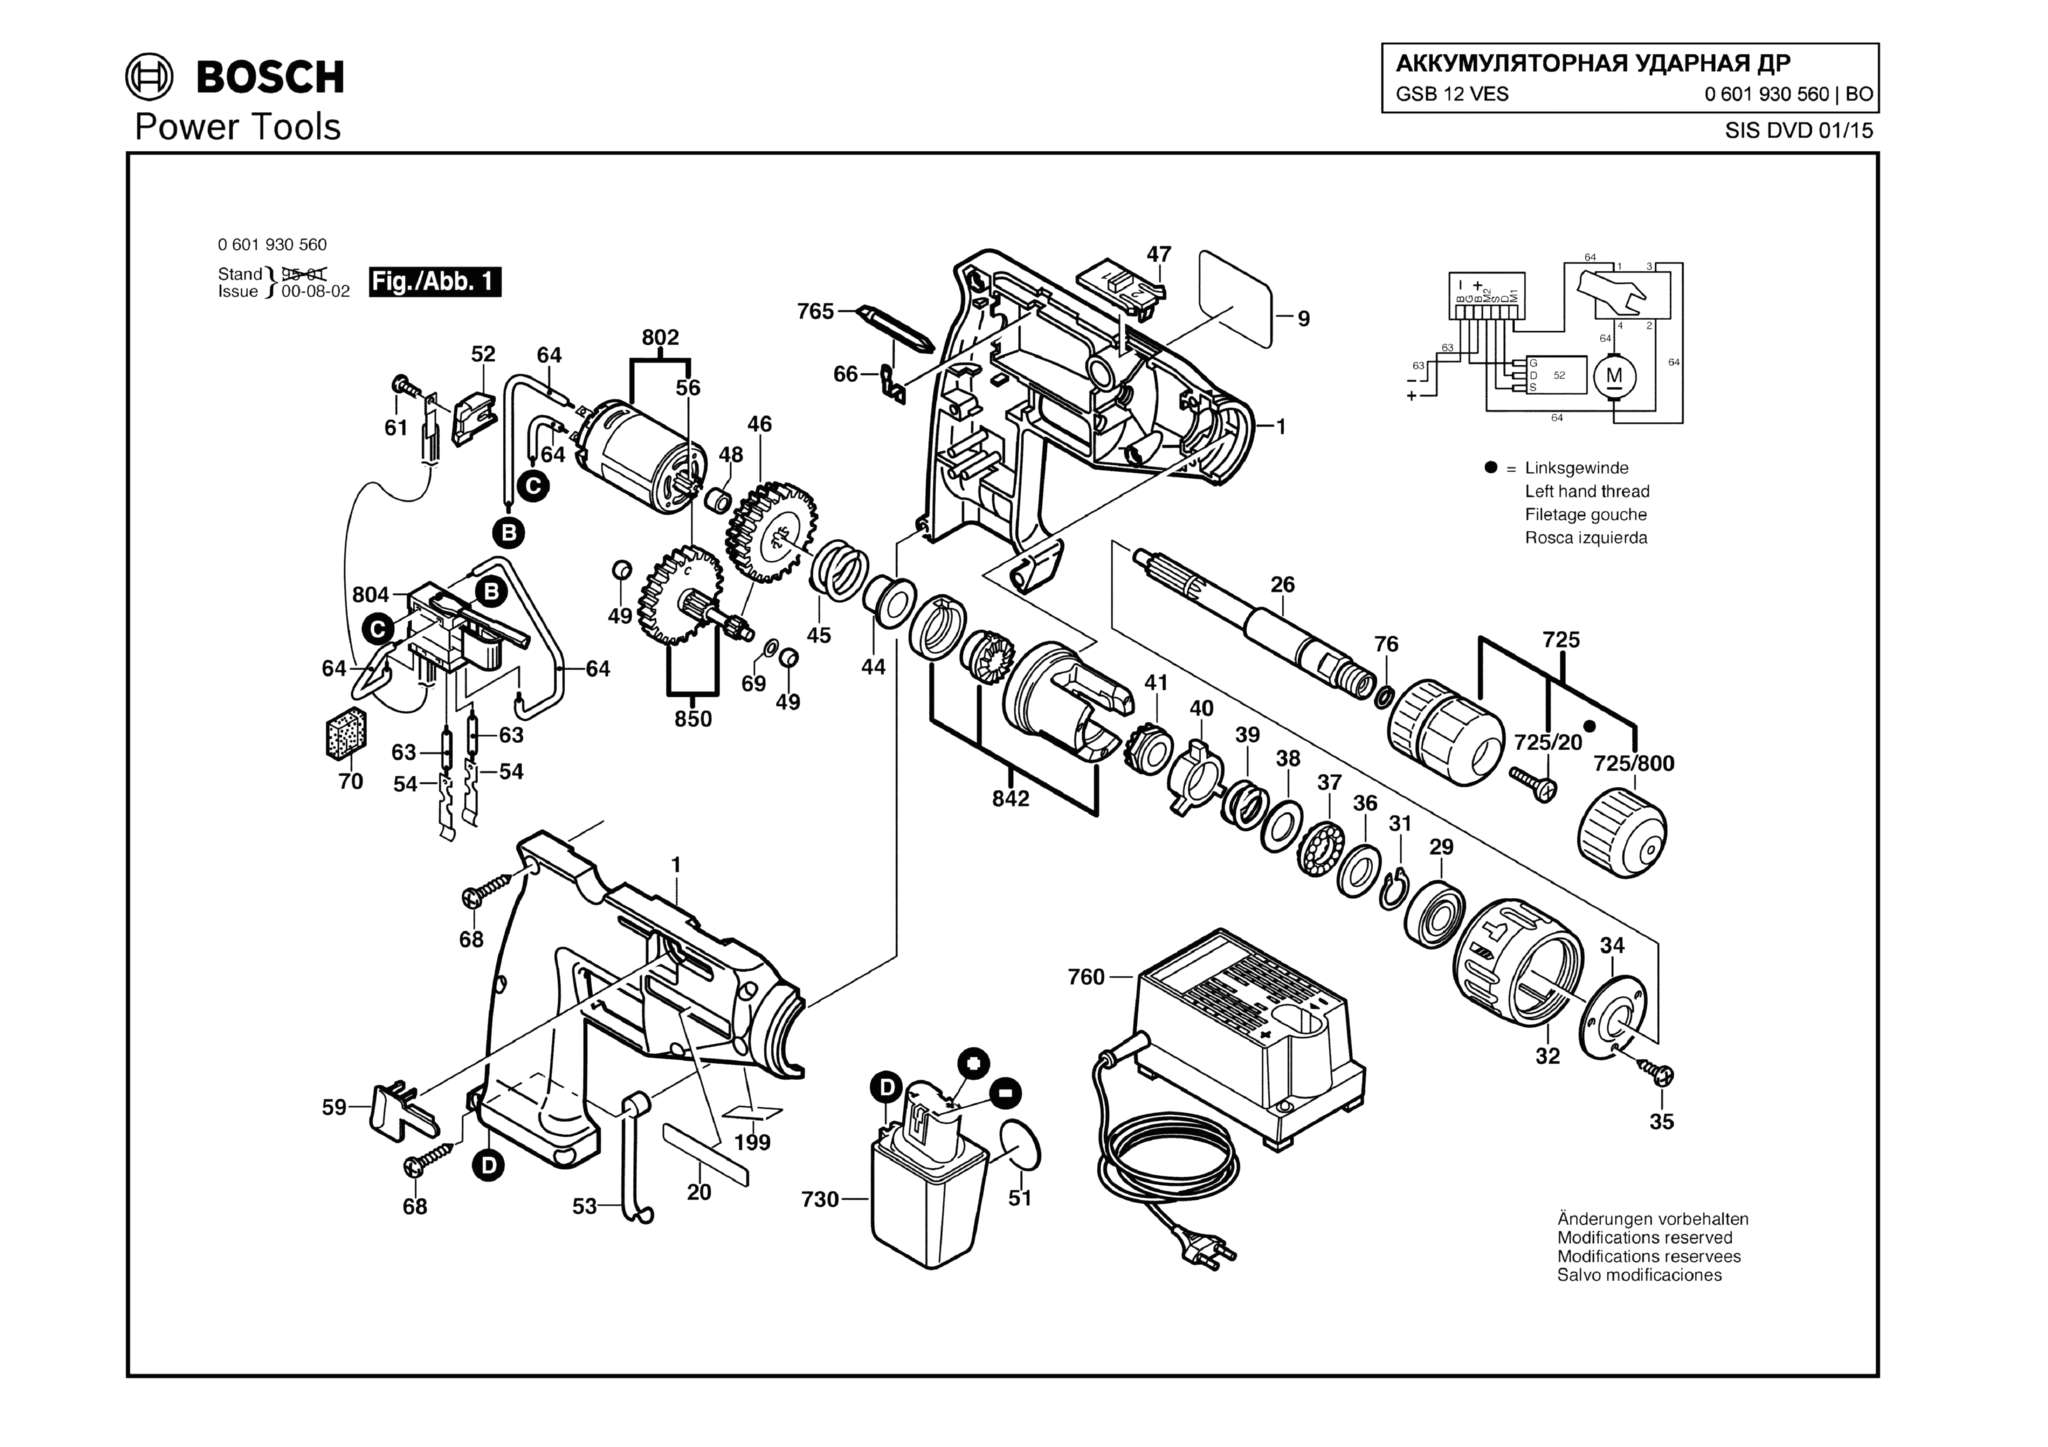 Запчасти, схема и деталировка Bosch GSB 12 VES (ТИП 0601930560)